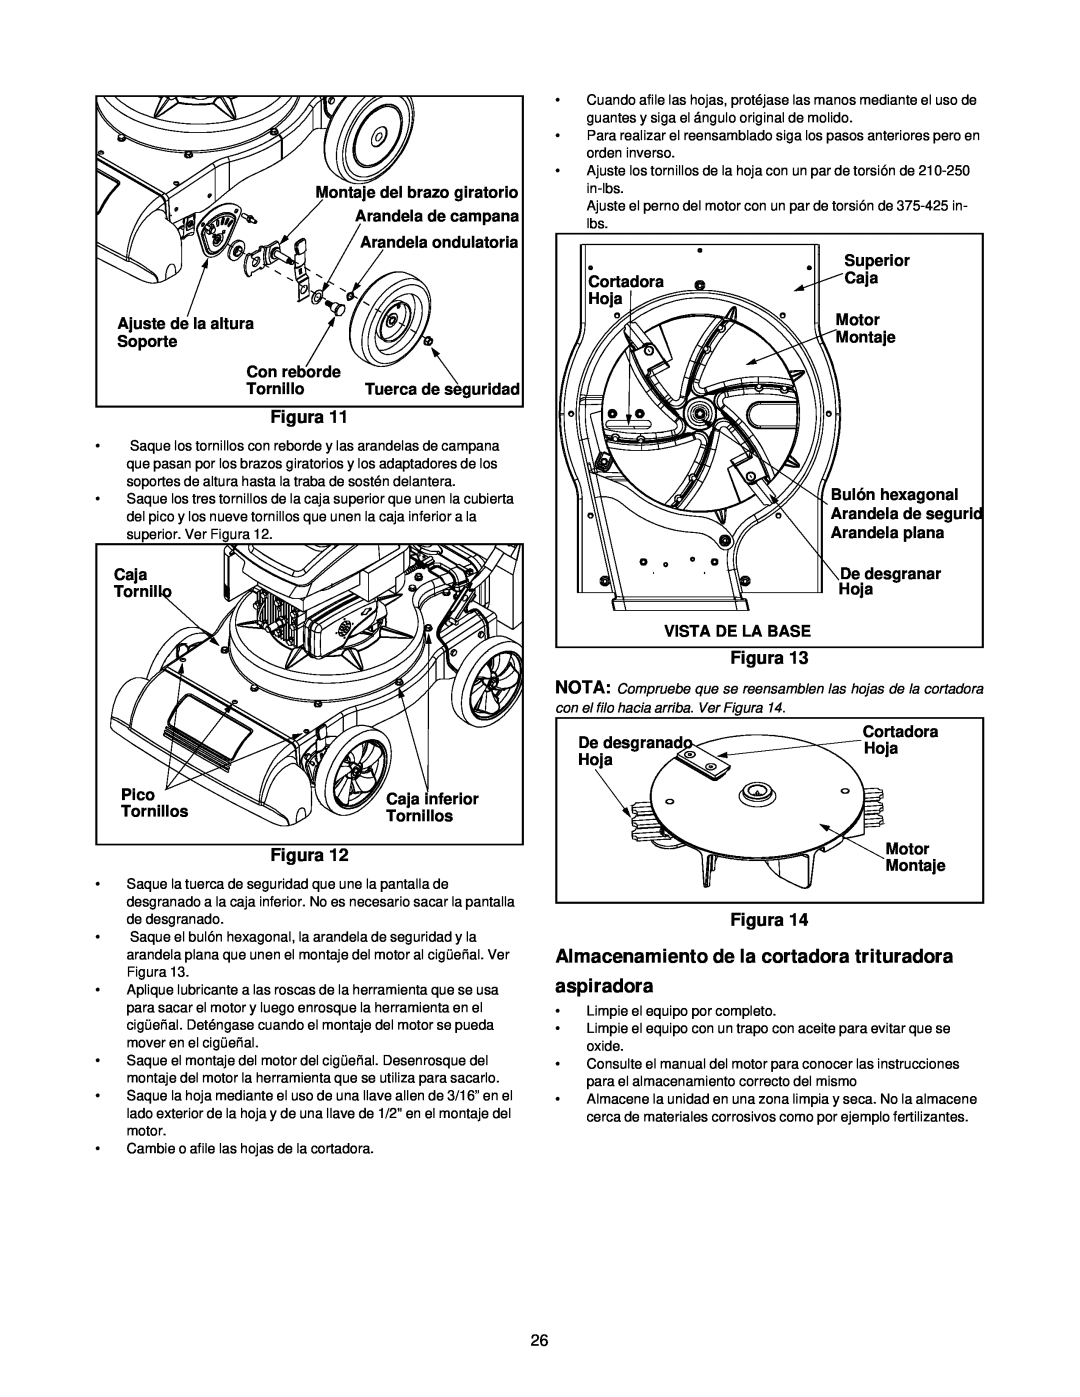 MTD 24A-020D000 manual Almacenamiento de la cortadora trituradora aspiradora, Figura 